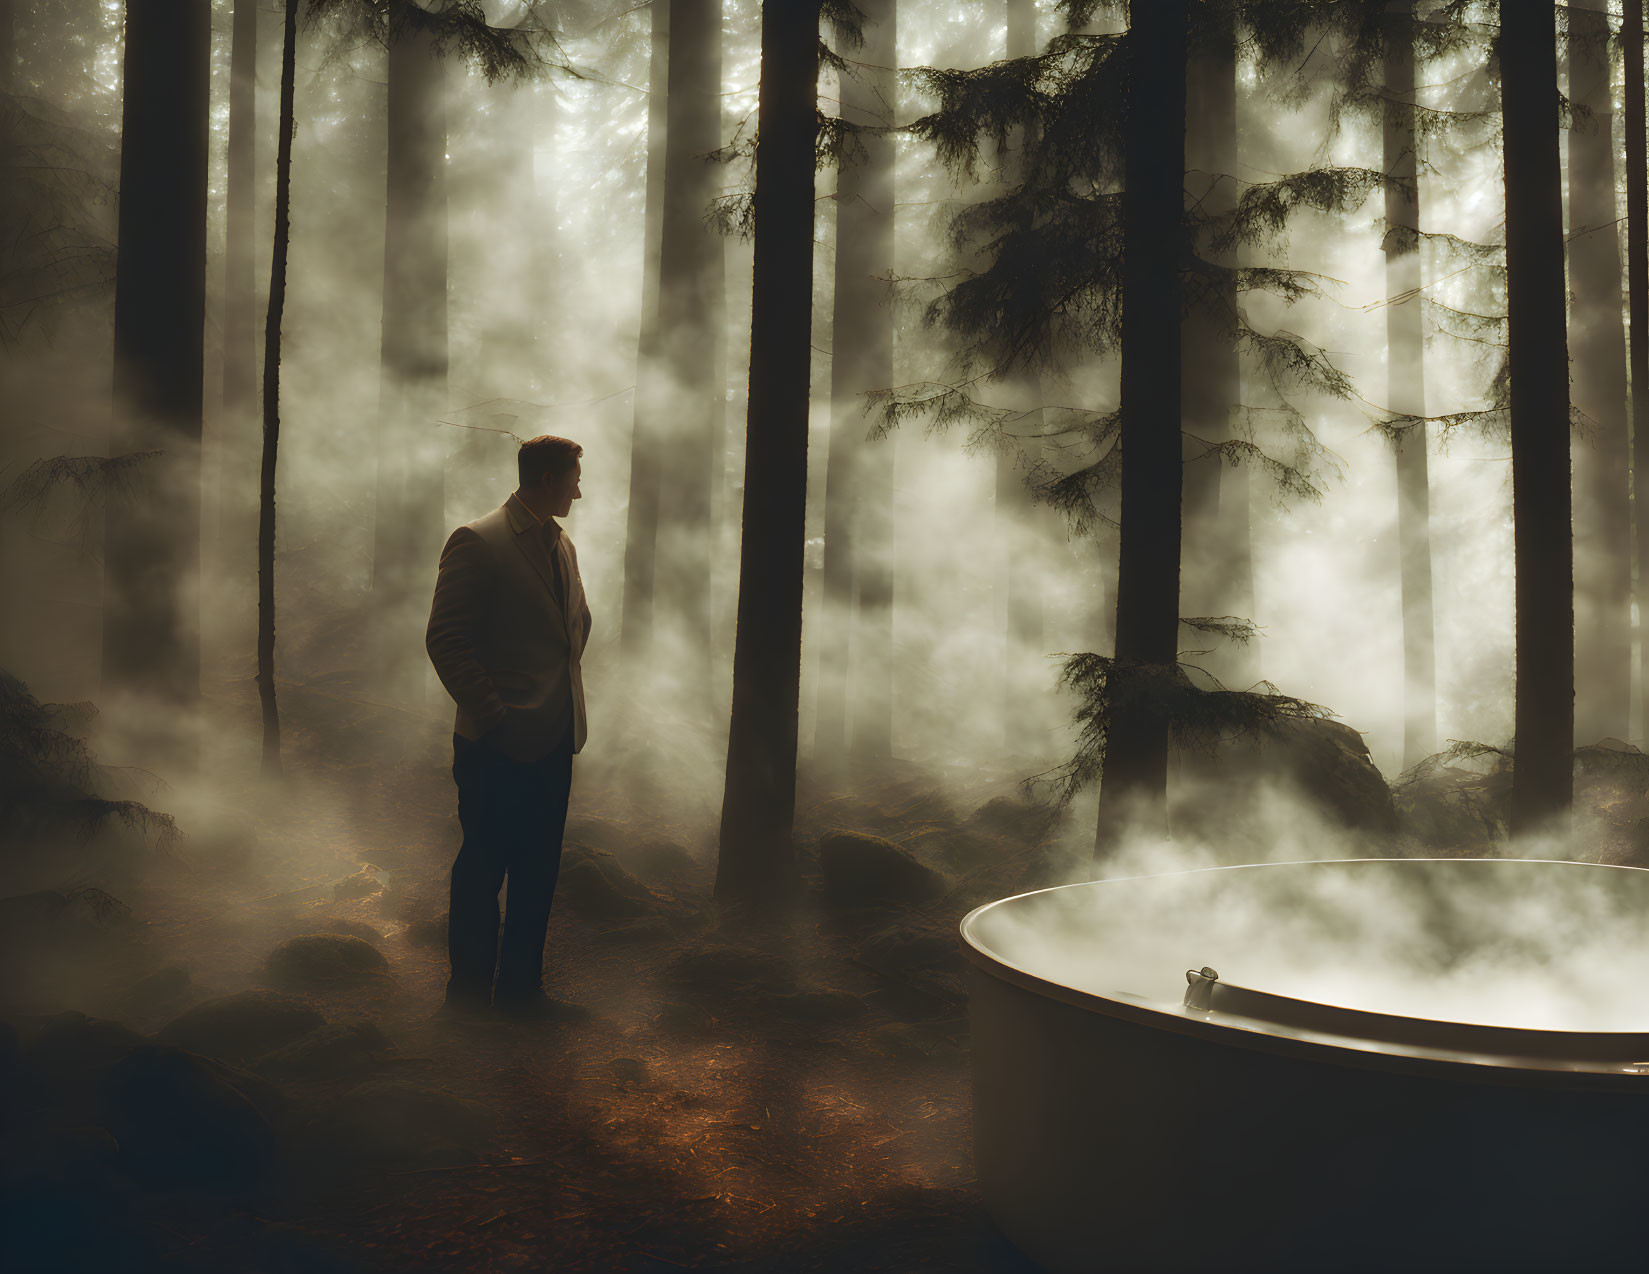 Man in Suit Beside Steaming Bathtub in Misty Forest